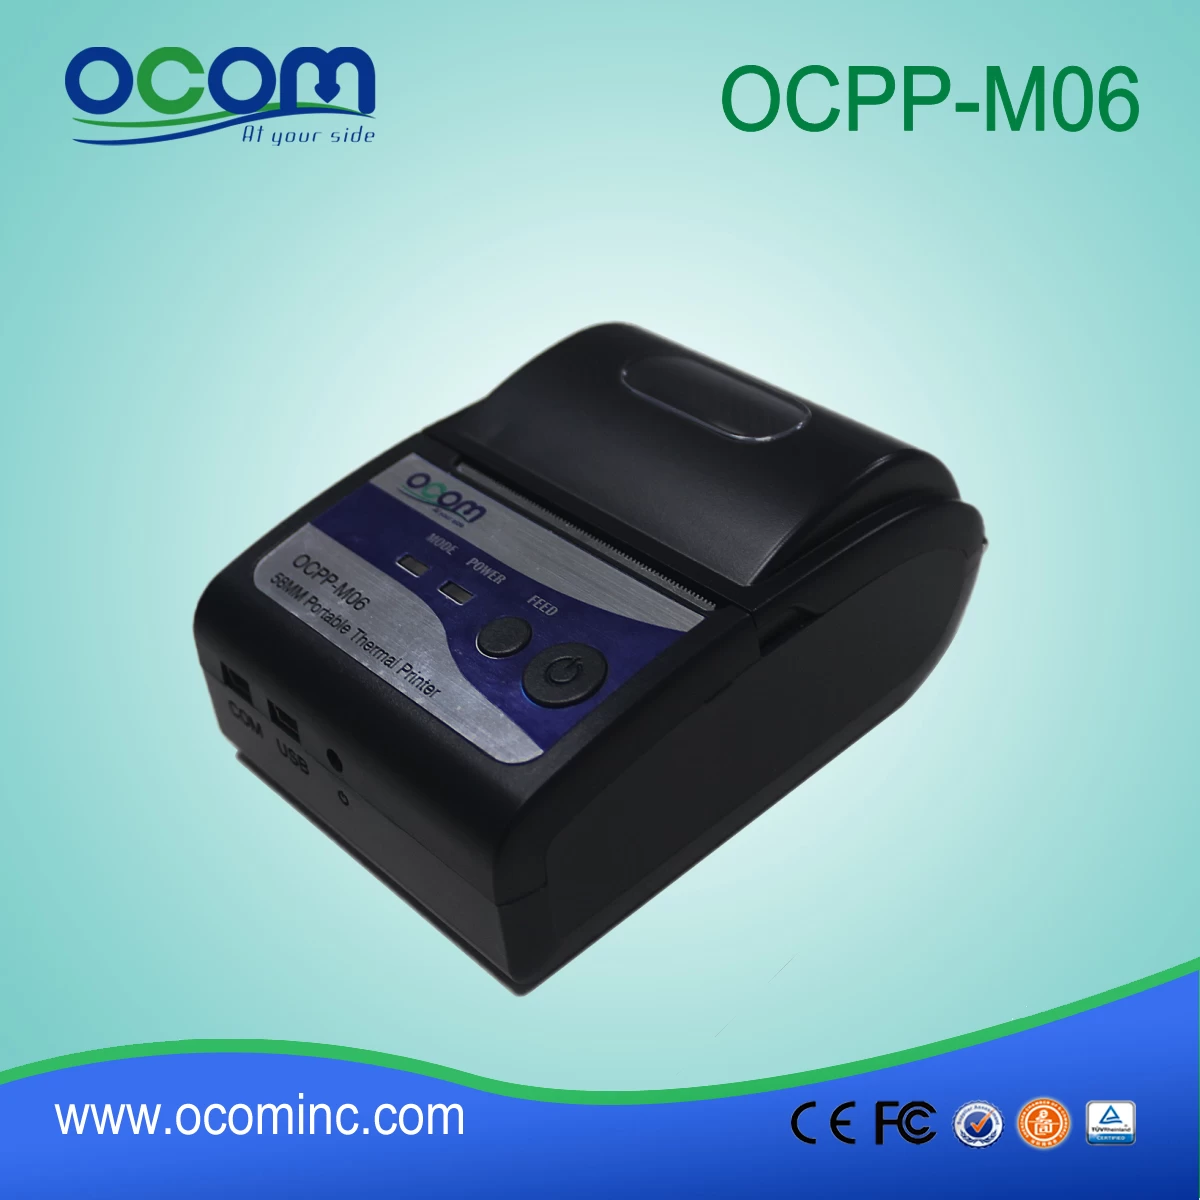 Portable mini printer for Android Phone  (OCPP-M06)